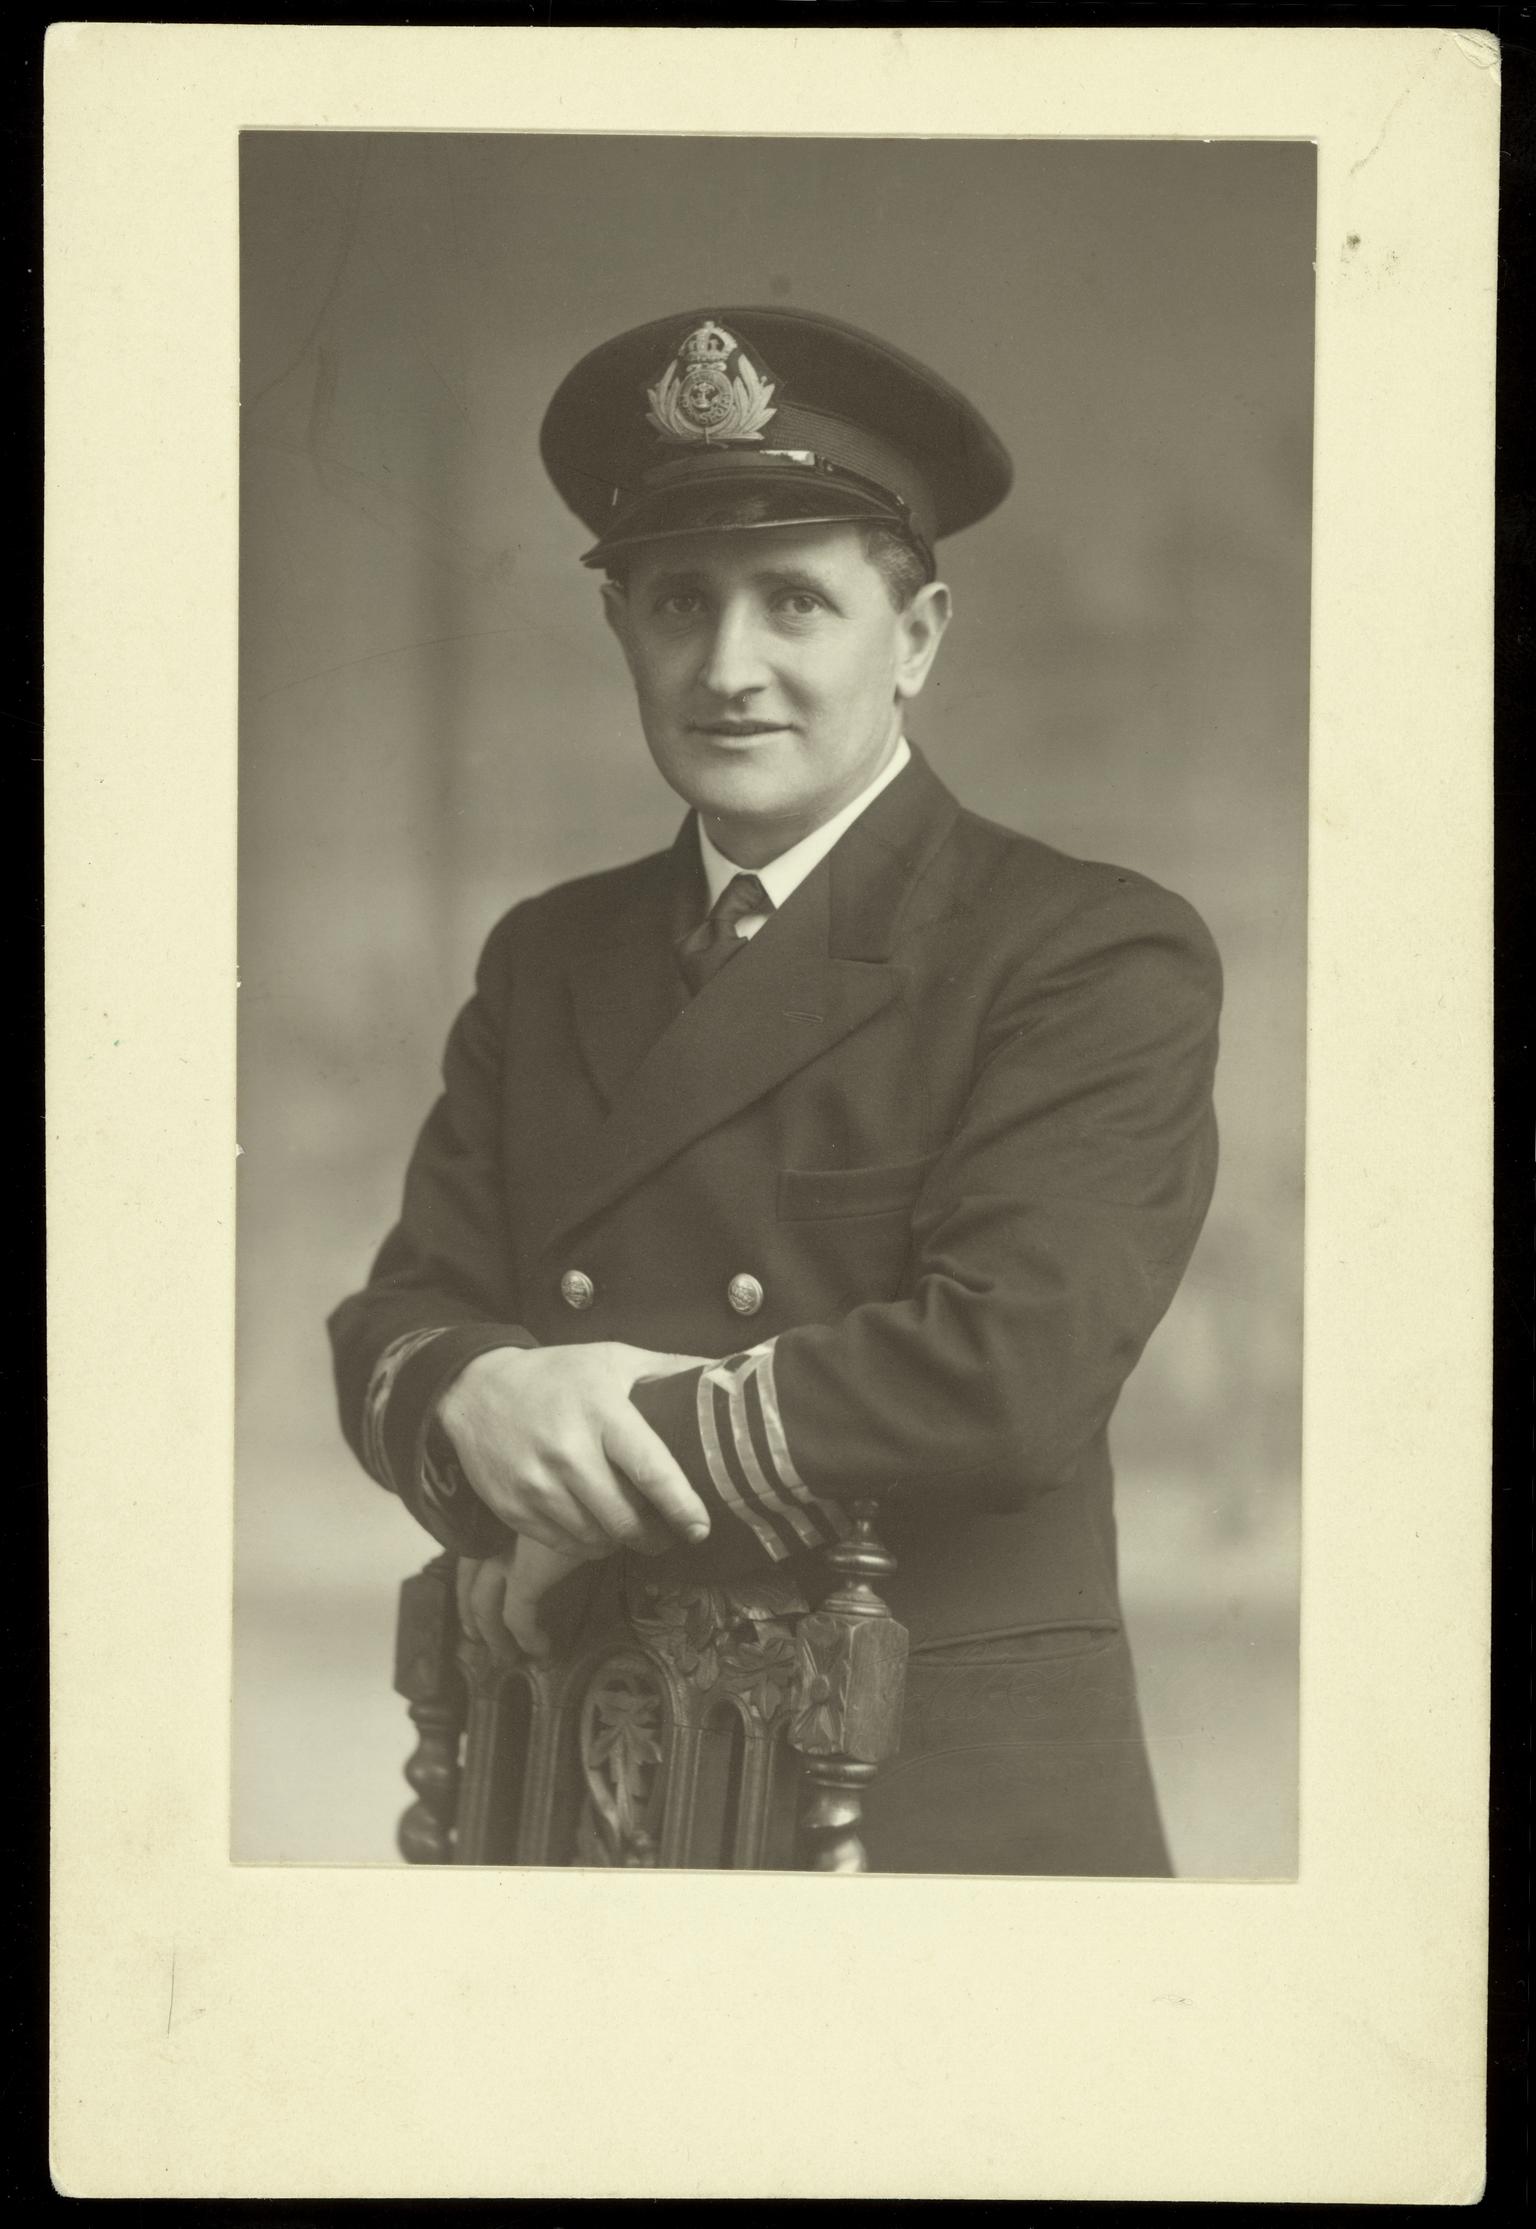 Capt. Walwyn Jones, photograph